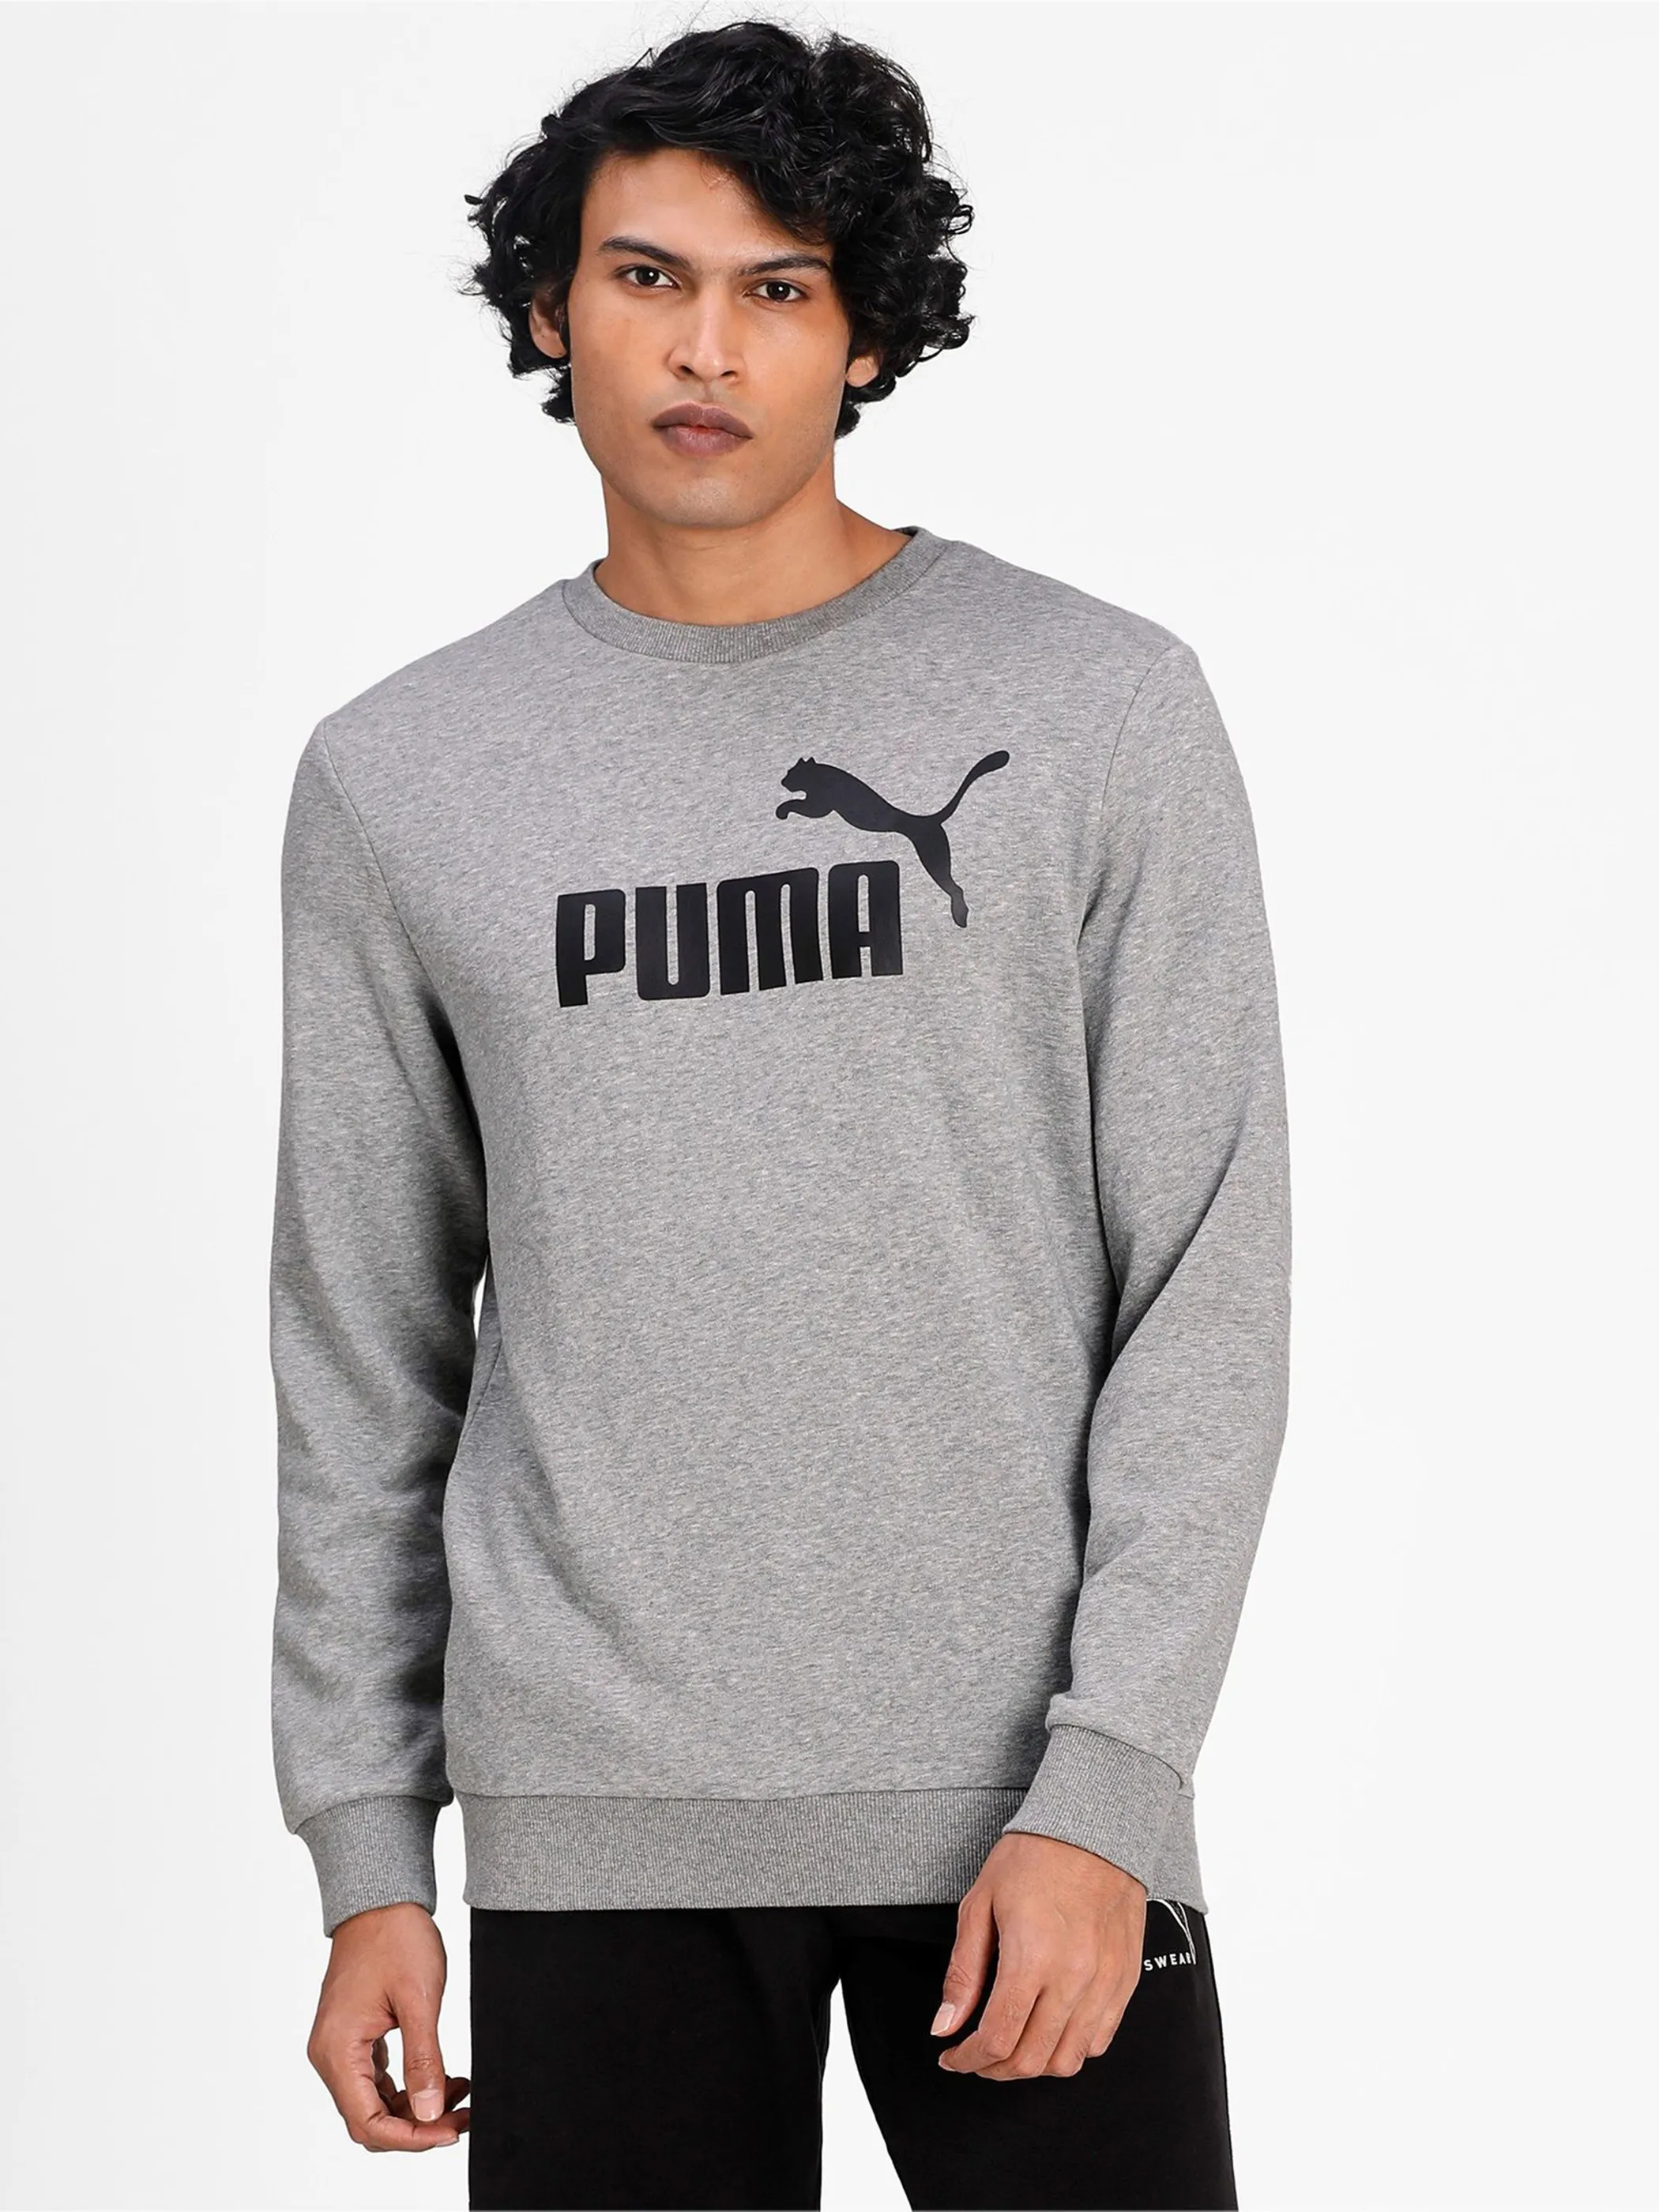 Puma 586680 He-Sweatshirt, Rundhals Grau 856657 03 3